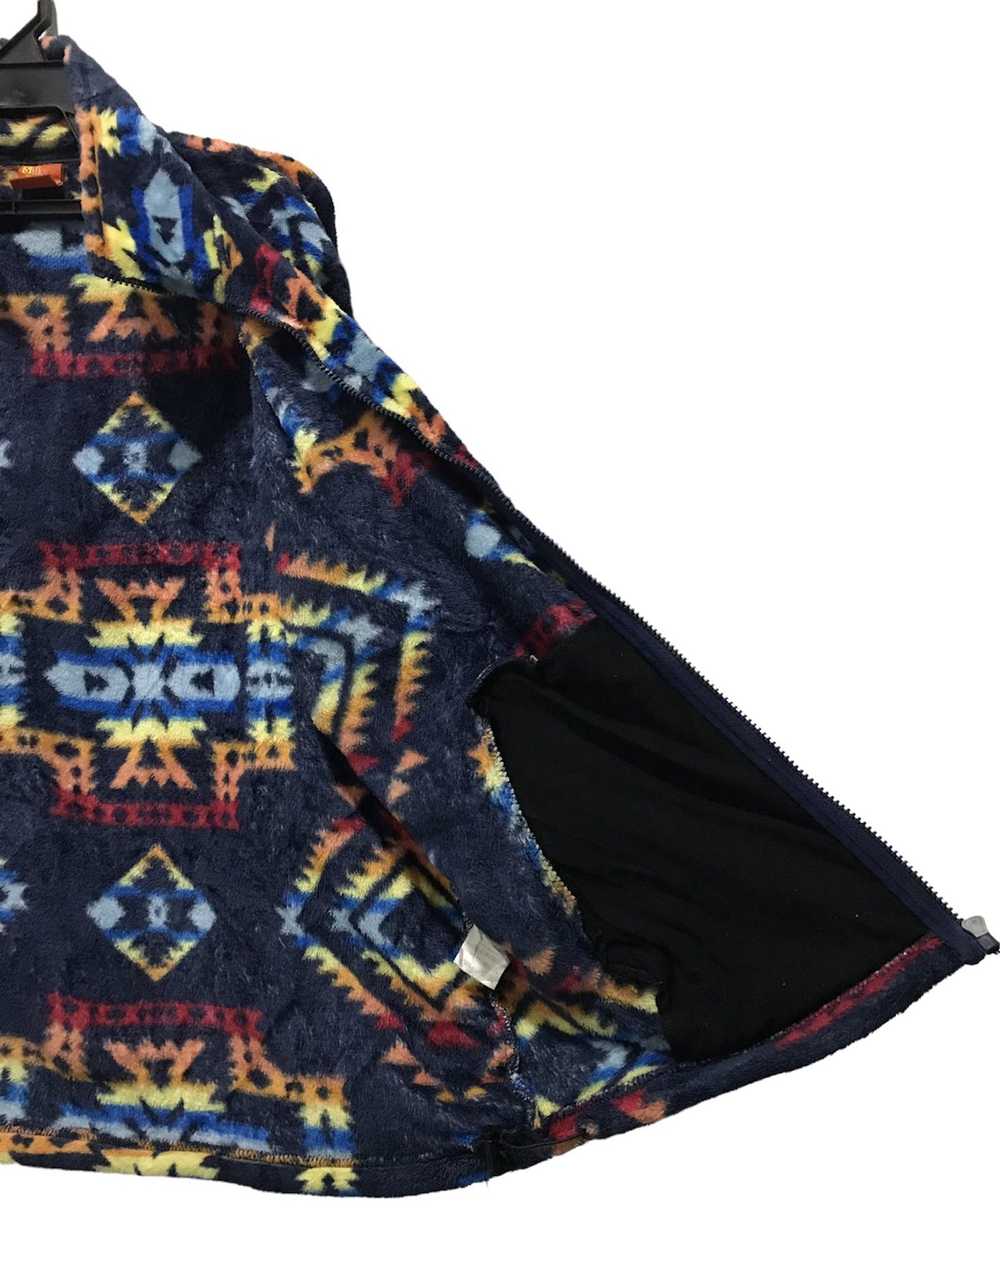 Japanese Brand Silky Fleece Jacket - image 8